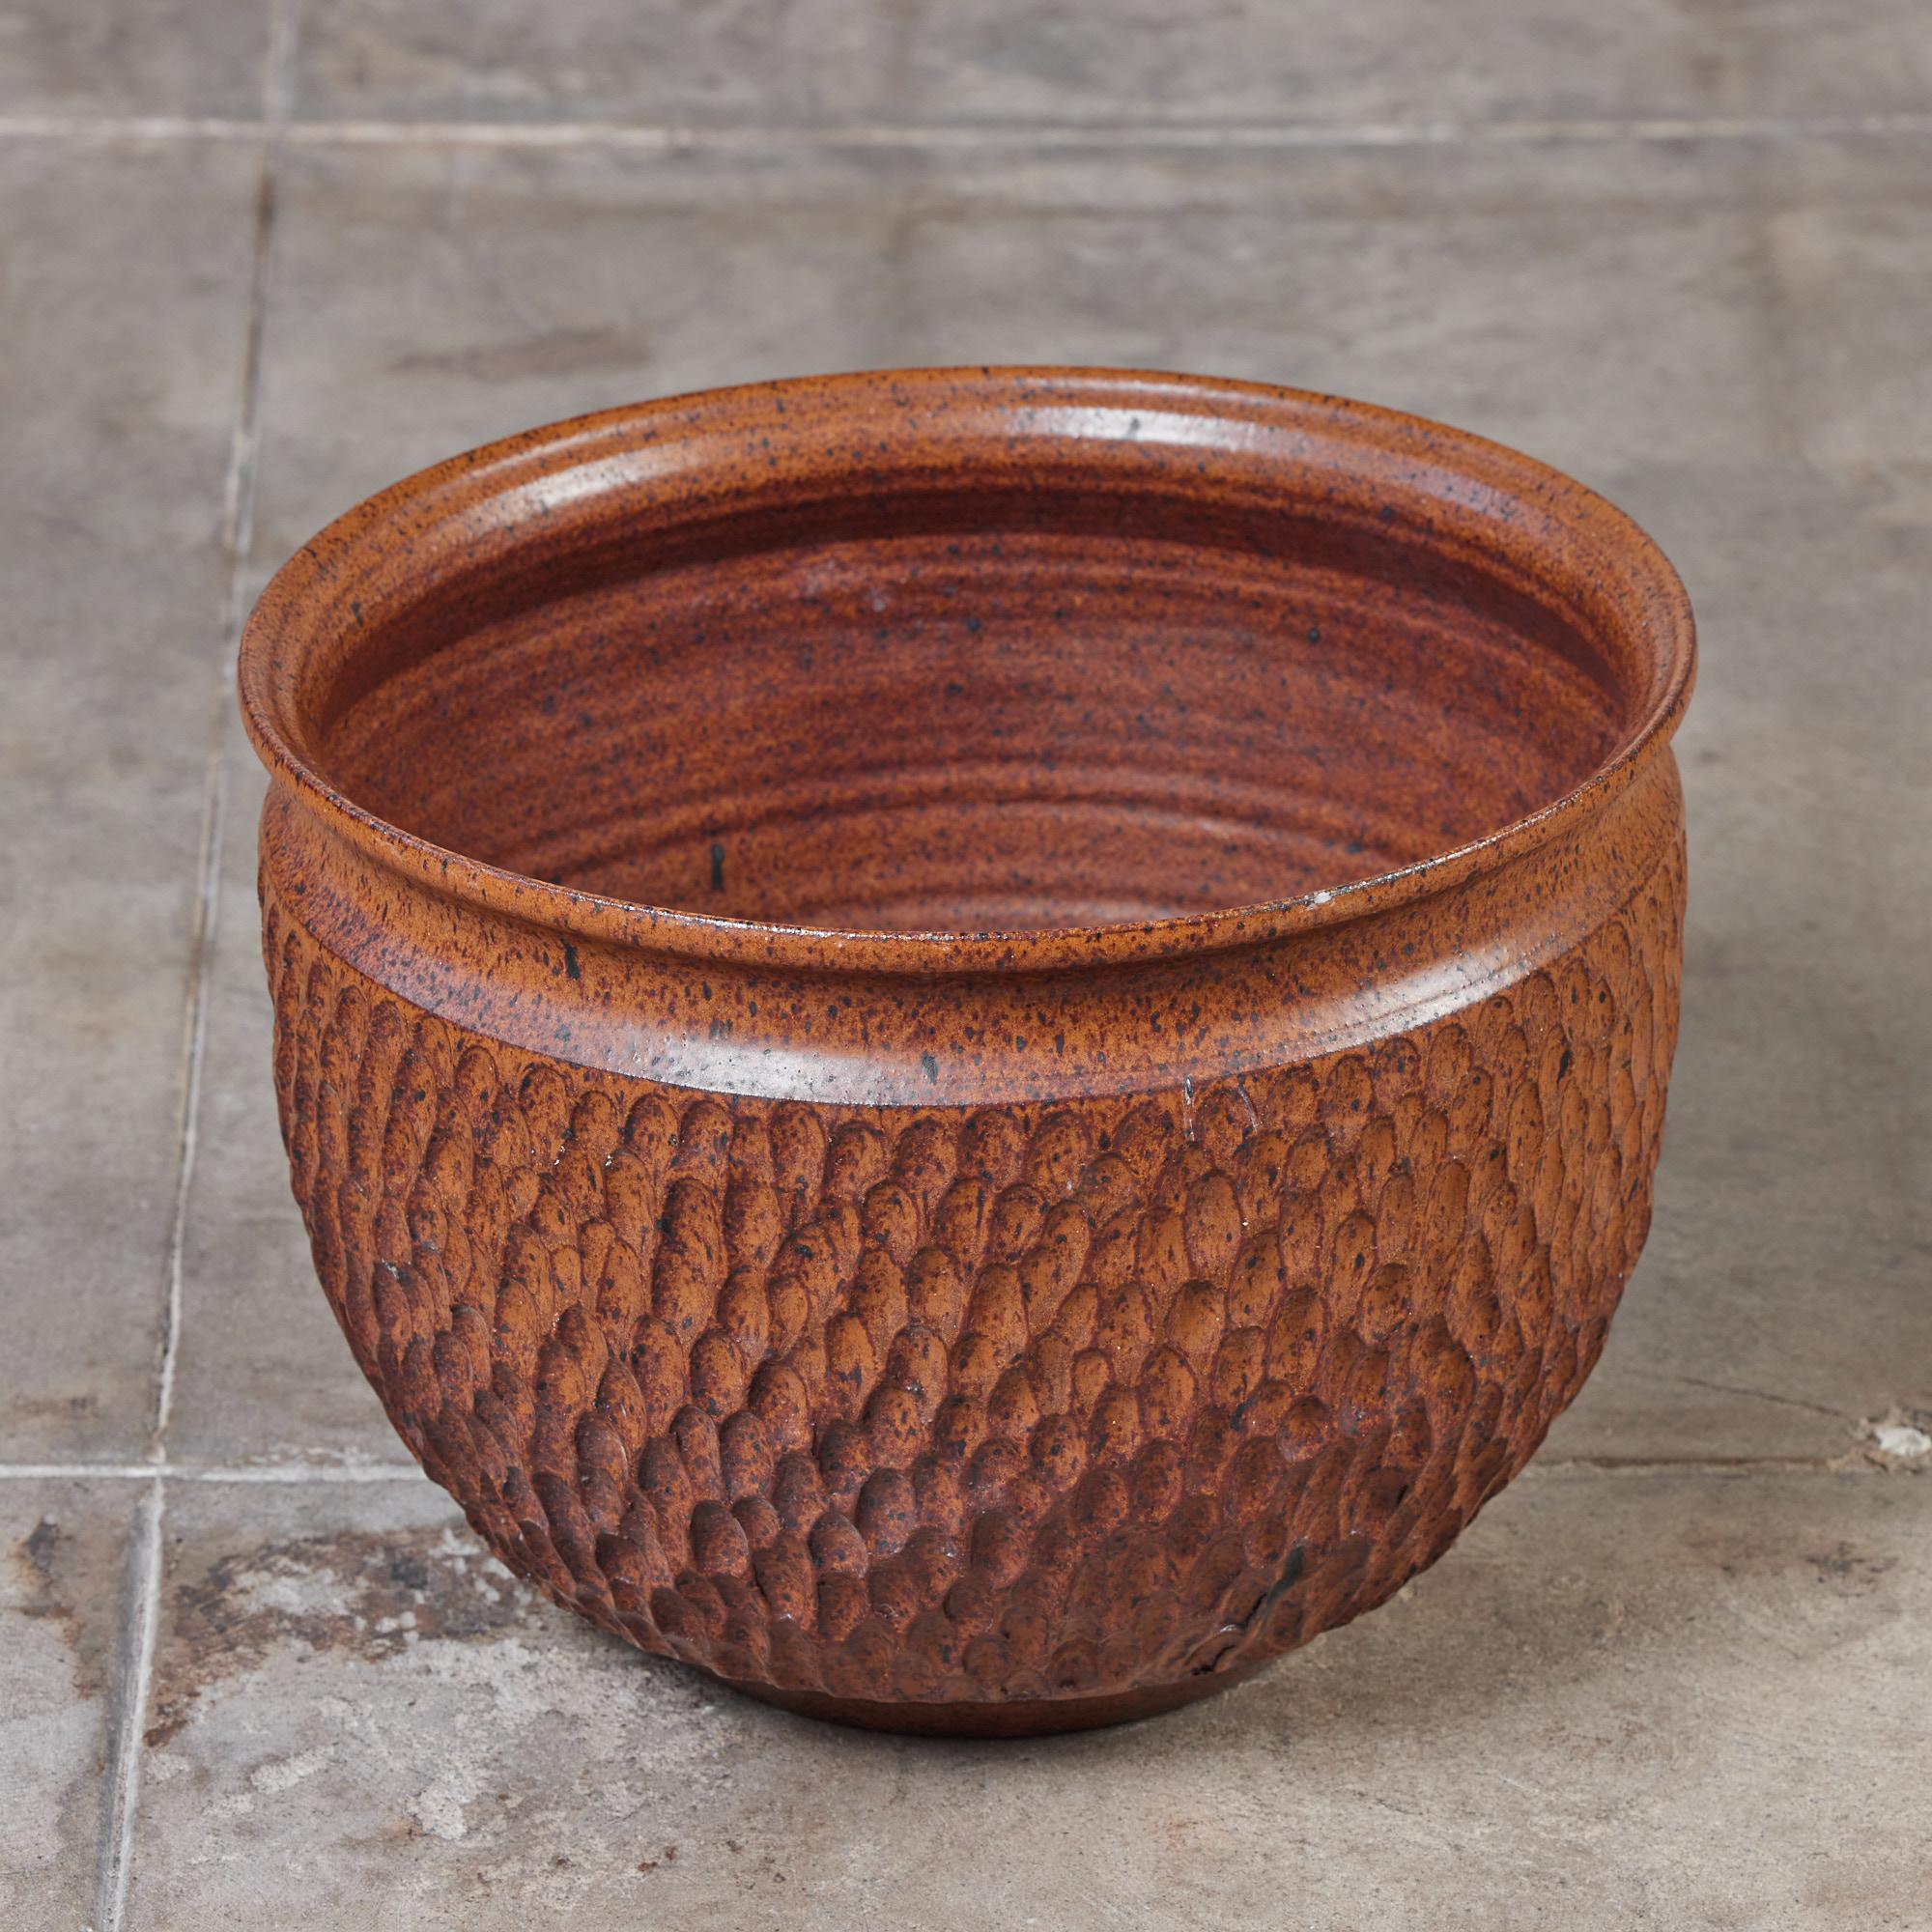 Stoneware David Cressey & Robert Maxwell for Earthgender “Thumbprint” Bowl Planter